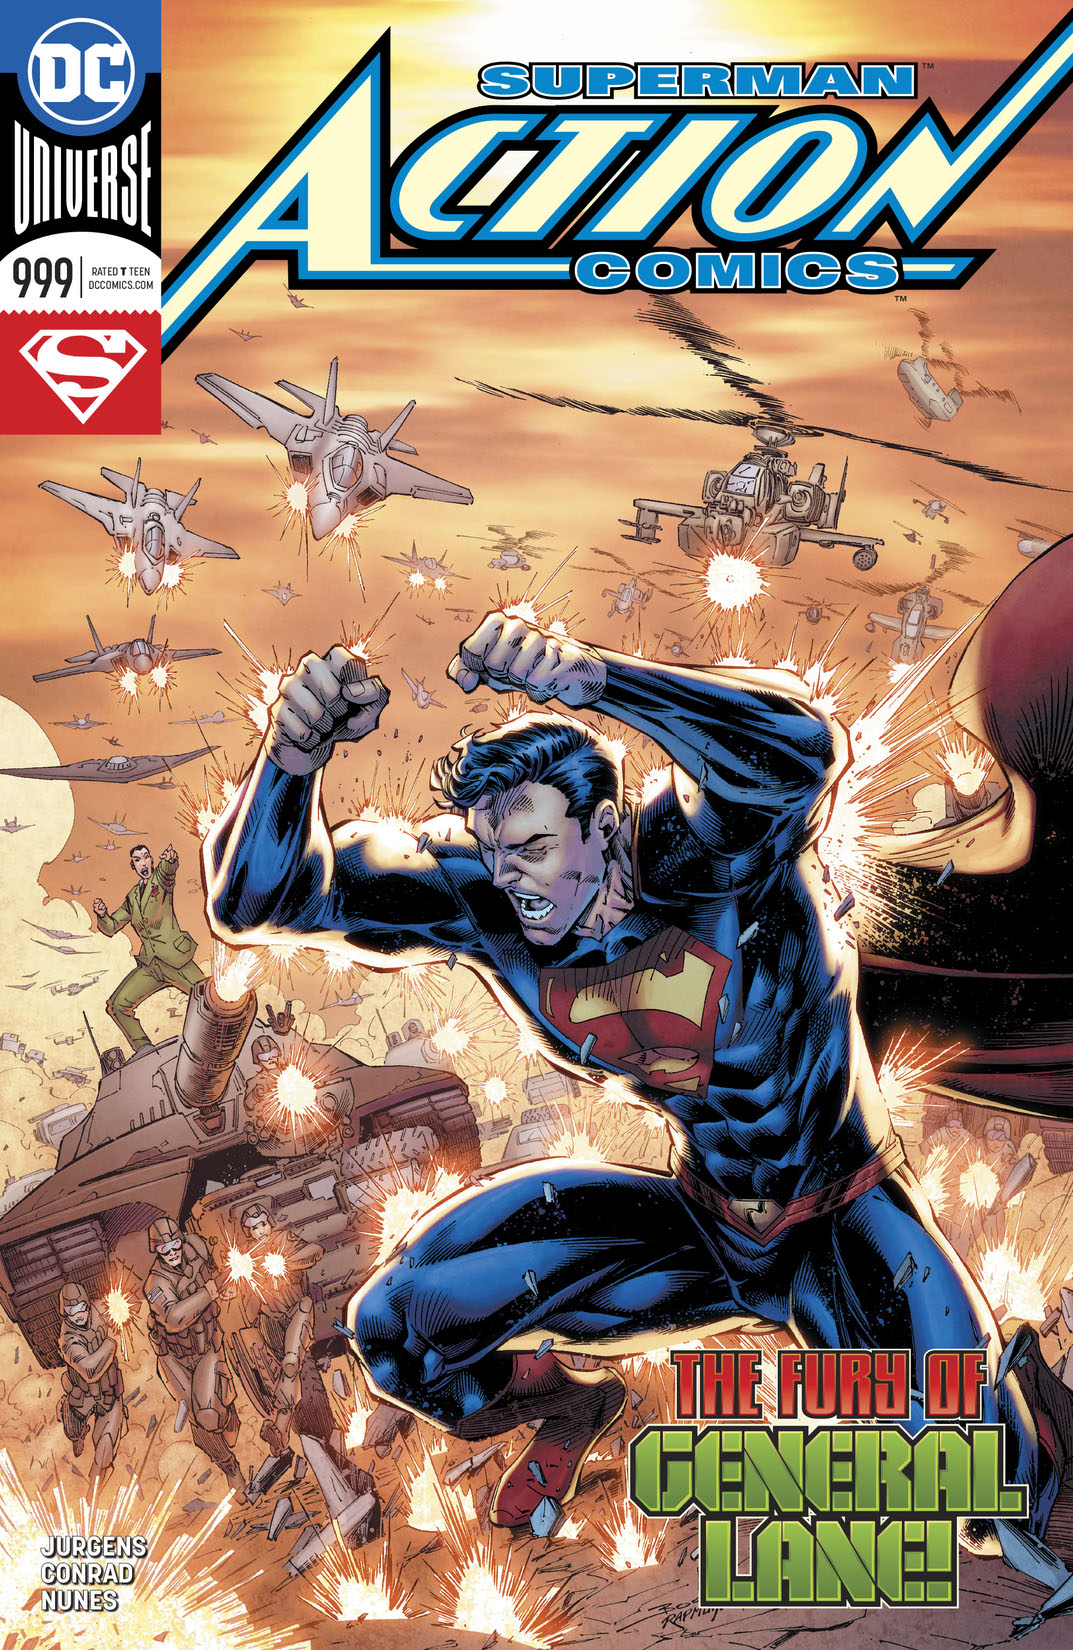 Action Comics (2016-) #999 preview images